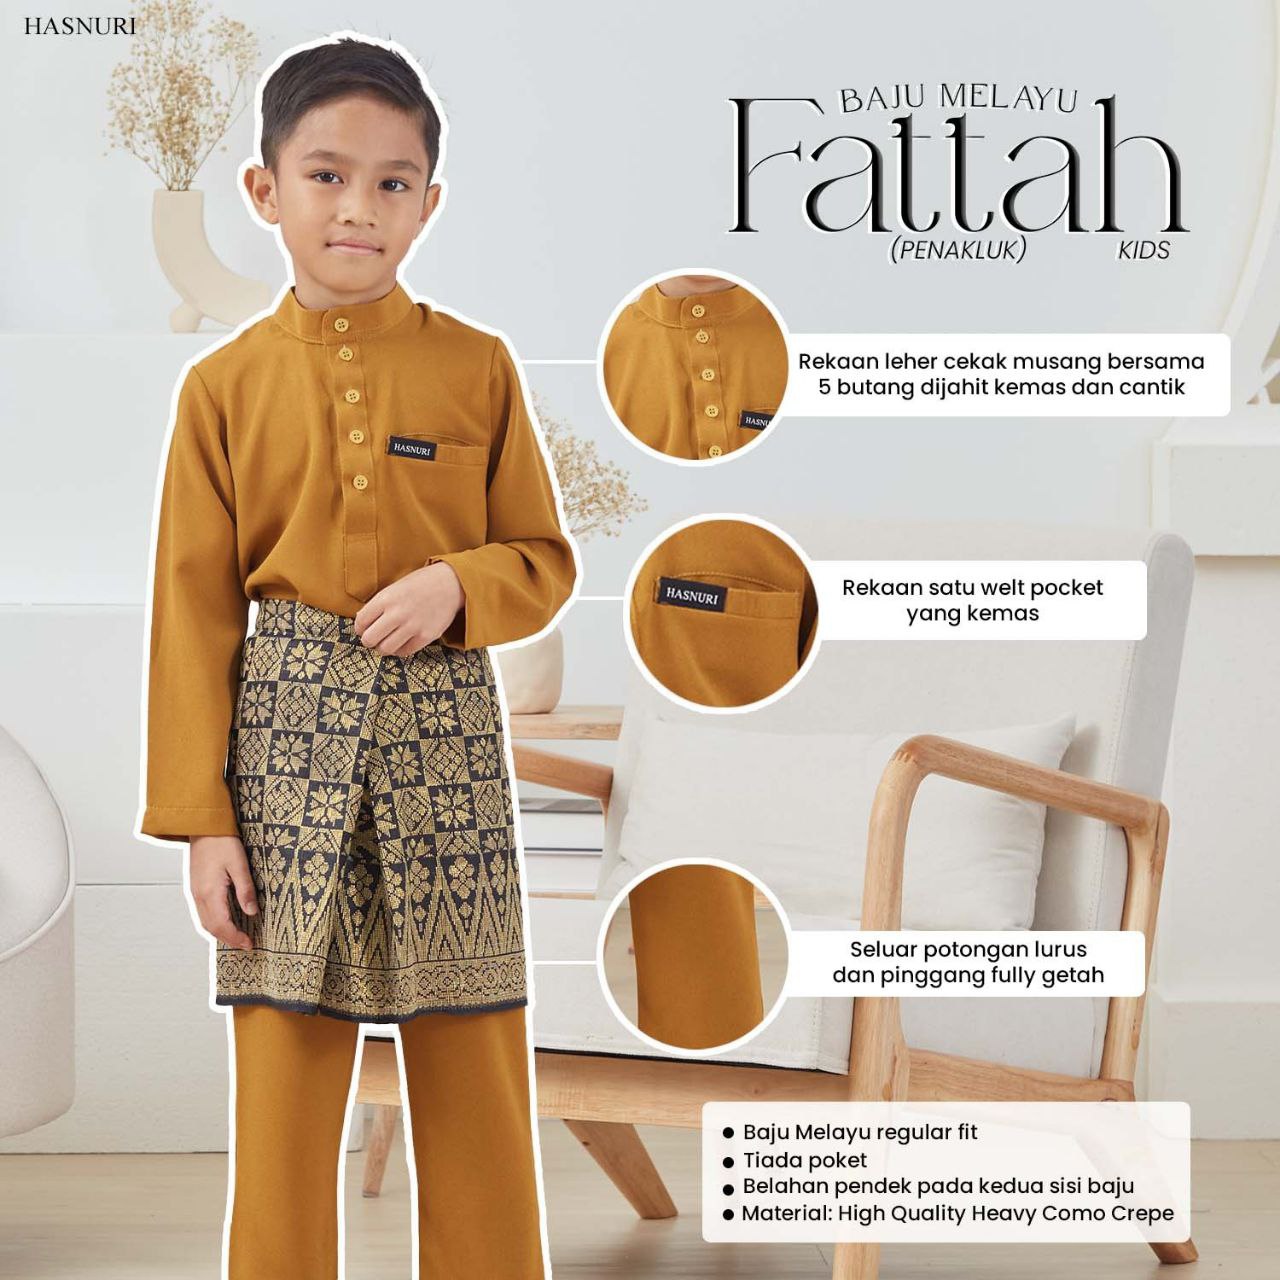 Baju Melayu Fattah Kids - Light Coco